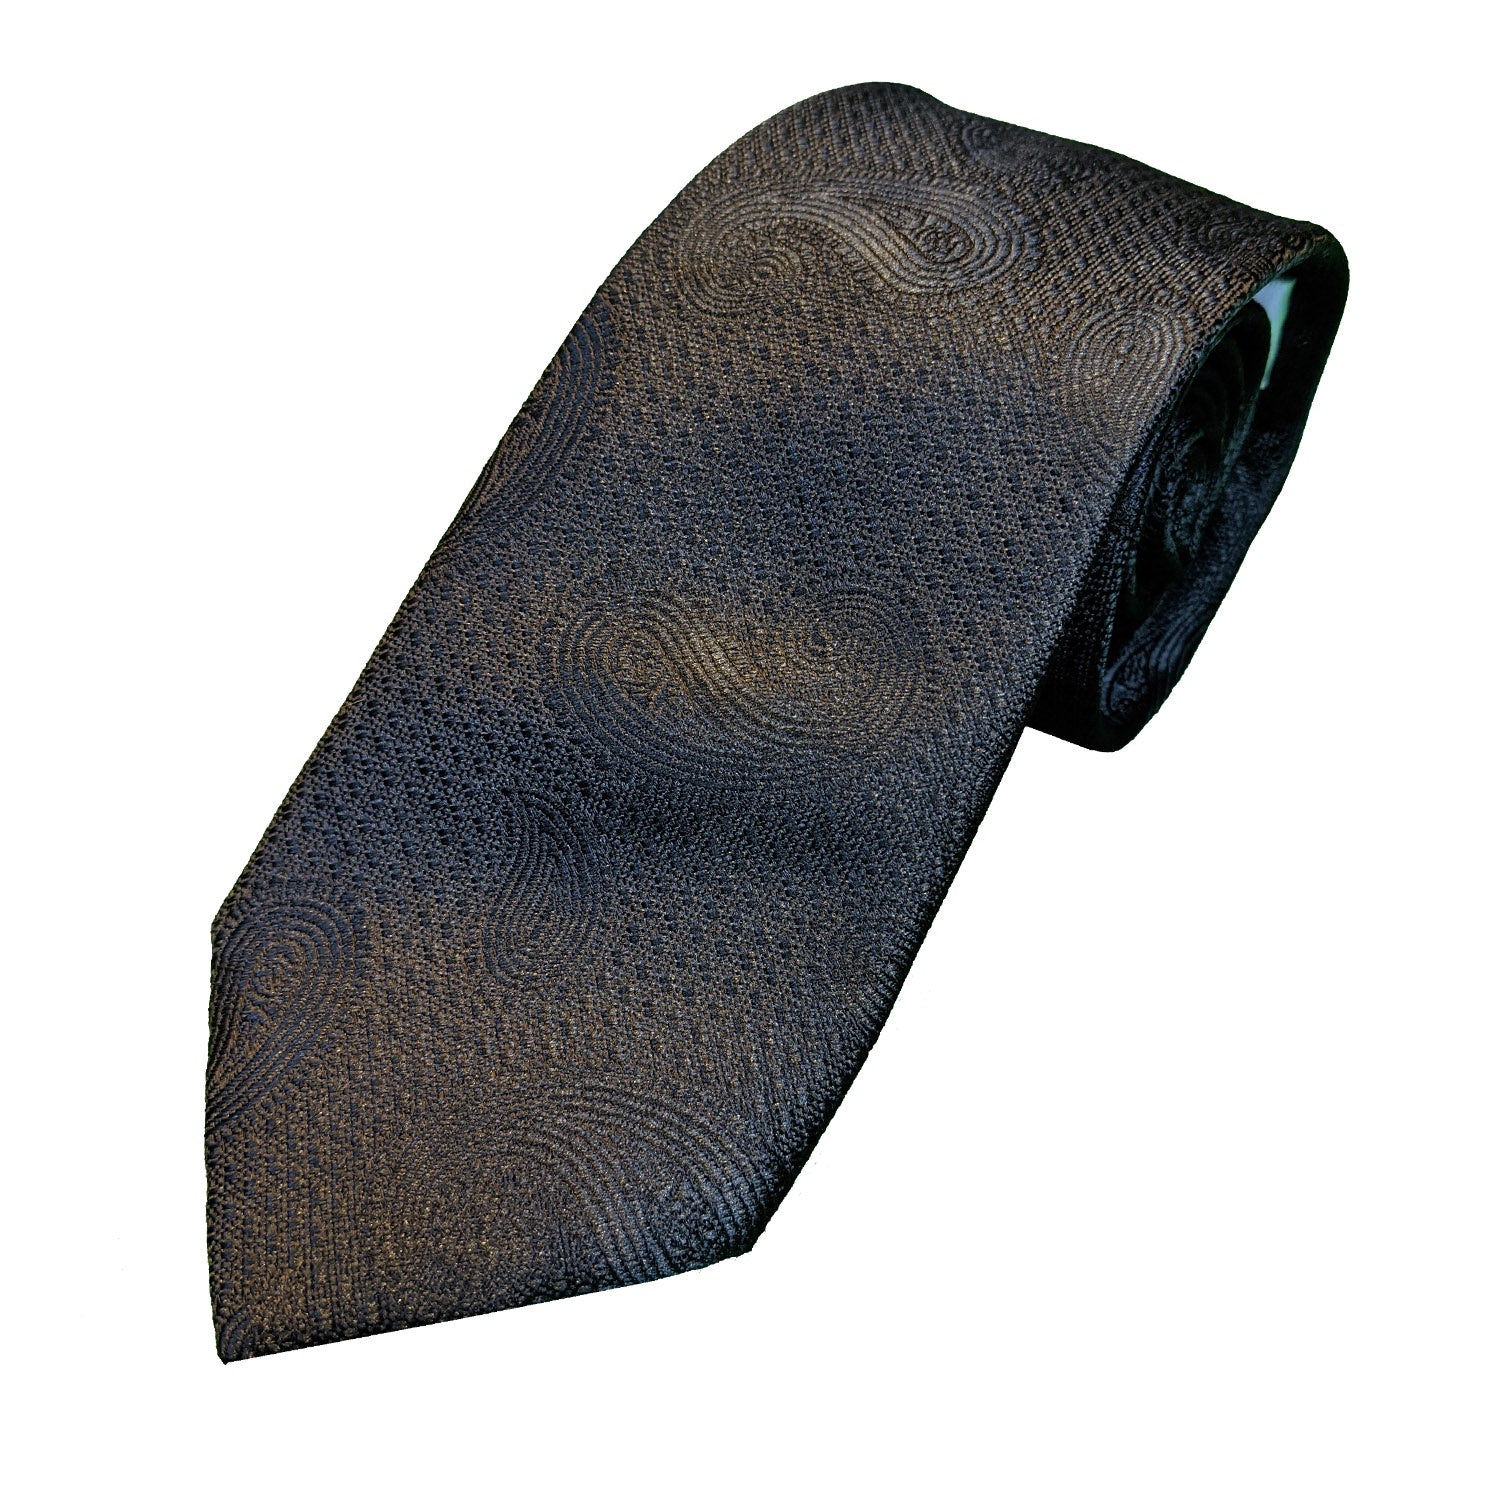 Kensington Paisley Tie - MWY311922 - Black 1